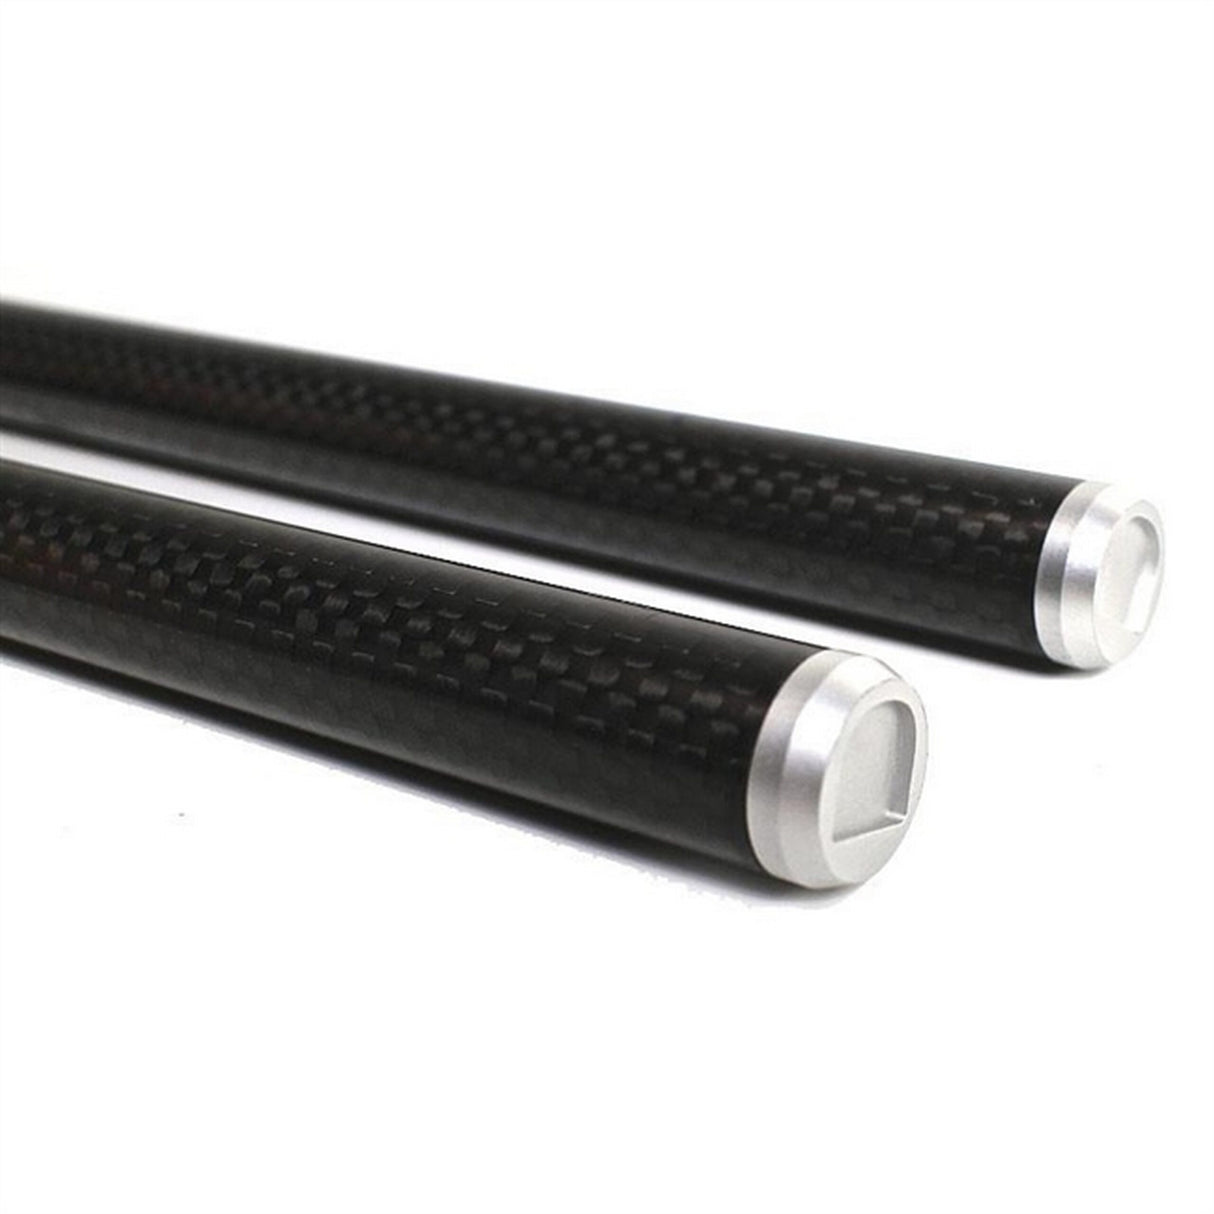 Genustech G-DCFR450 Deluxe Carbon Fiber Rods, 450mm, Pair